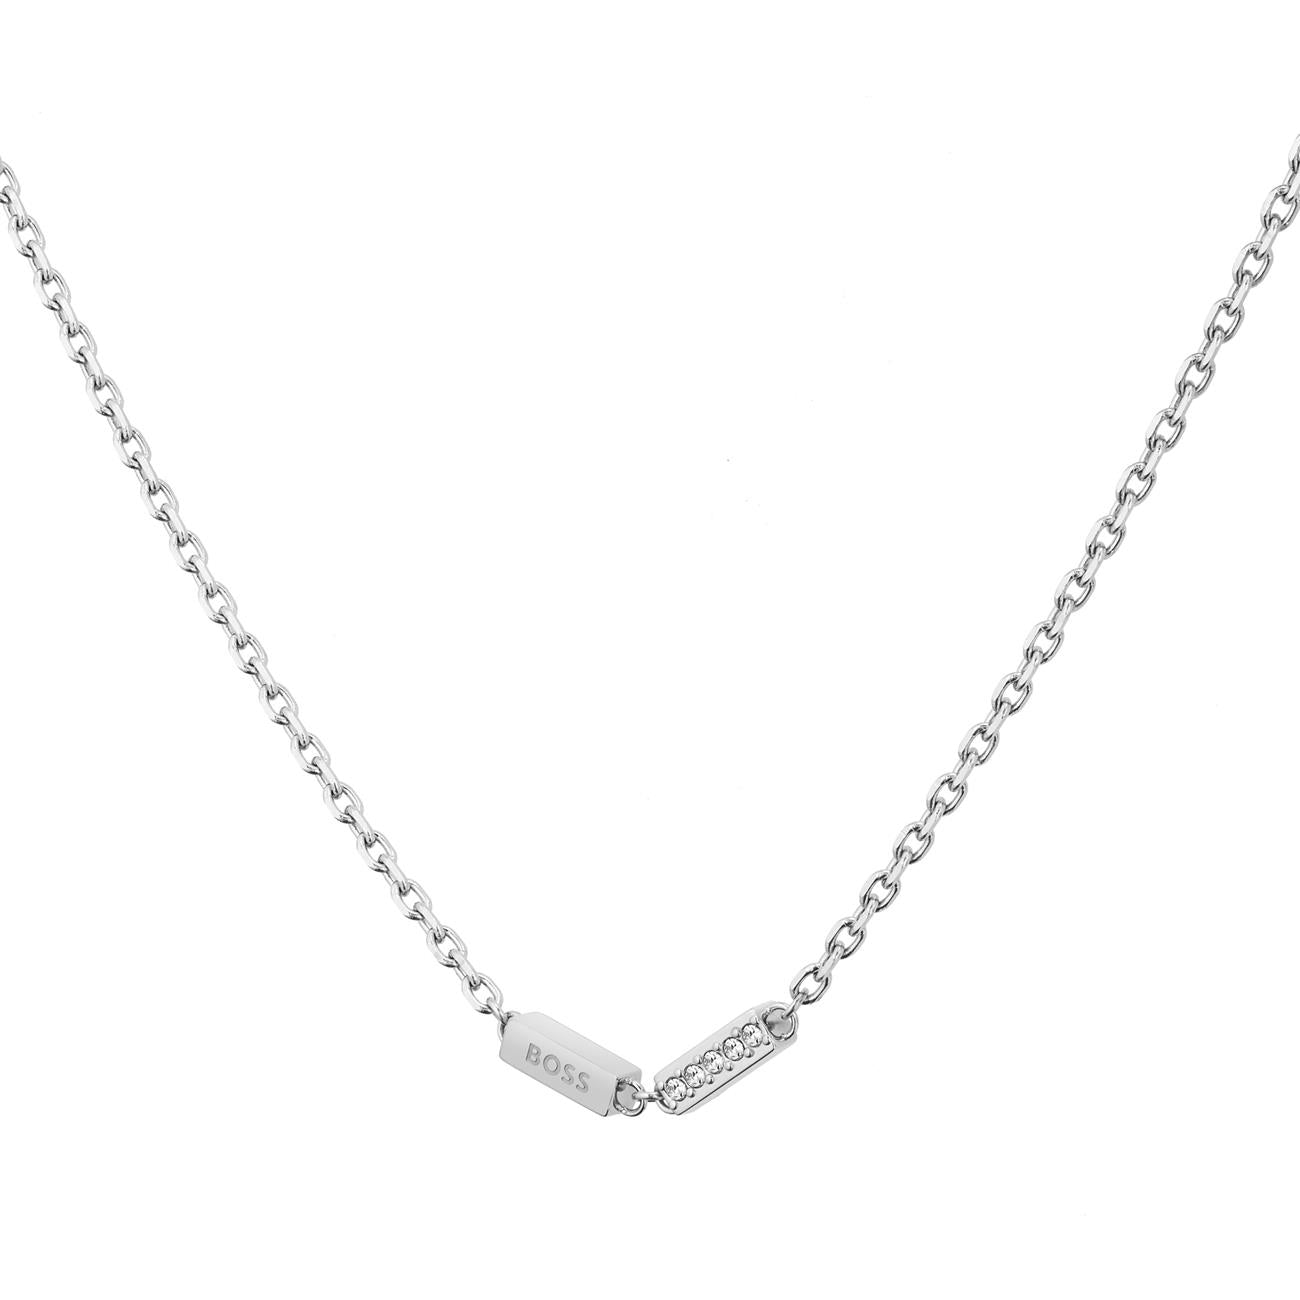 Boss Ladies Laria Steel Crystal Necklace 1580447